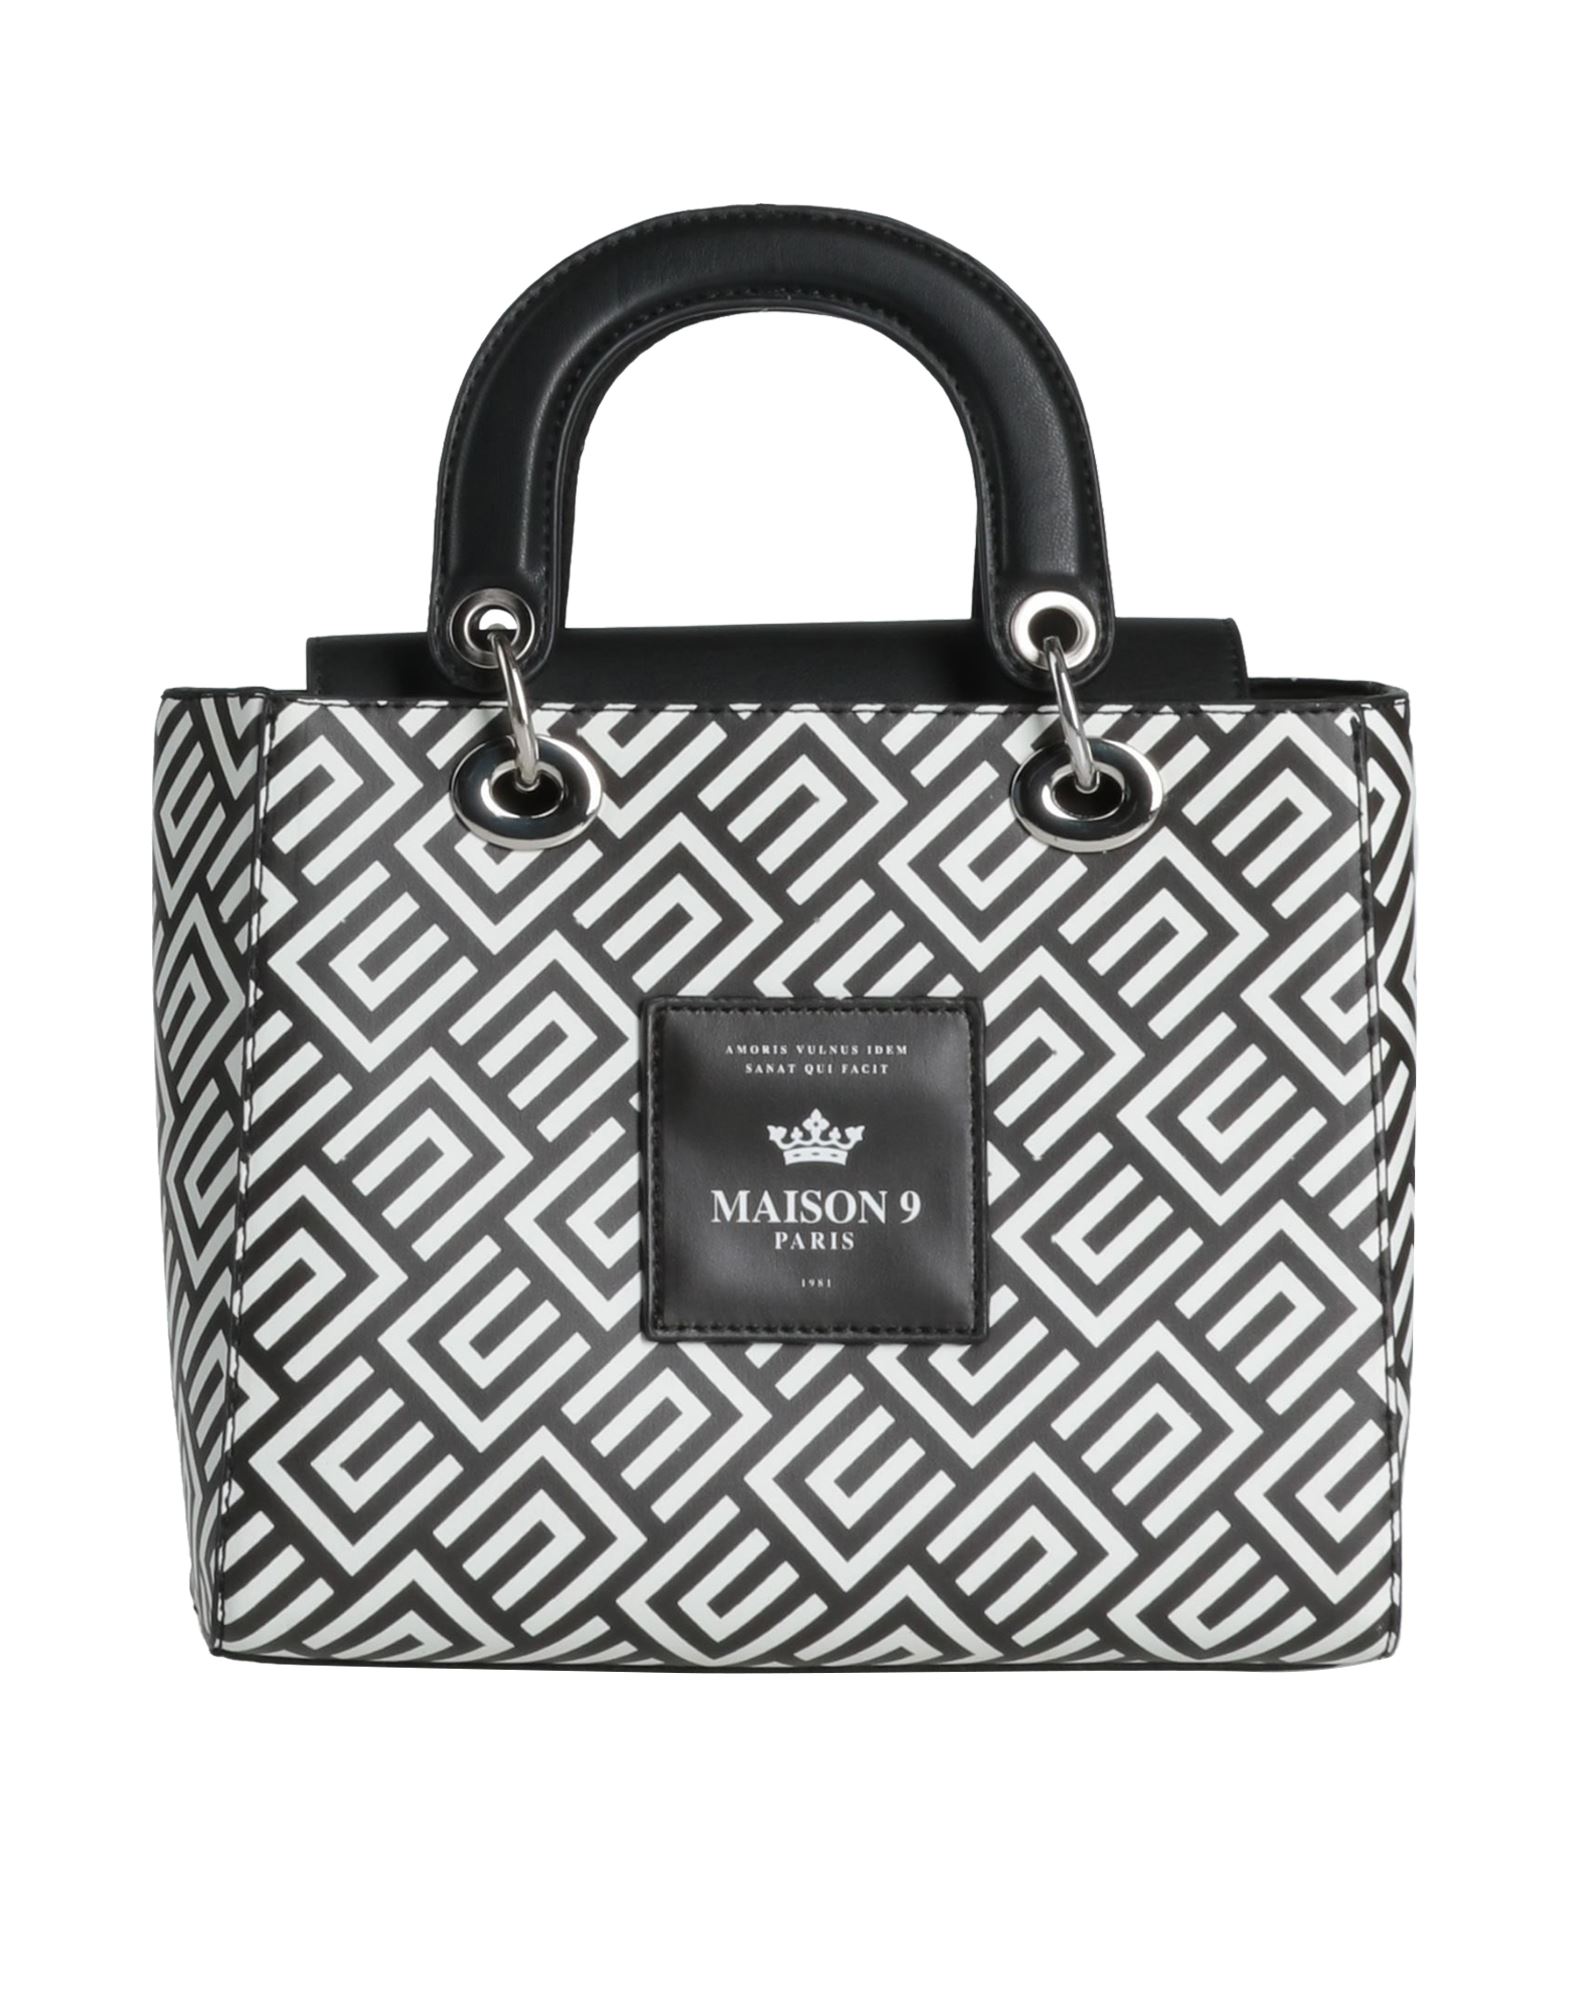 MAISON 9 Paris Handbags